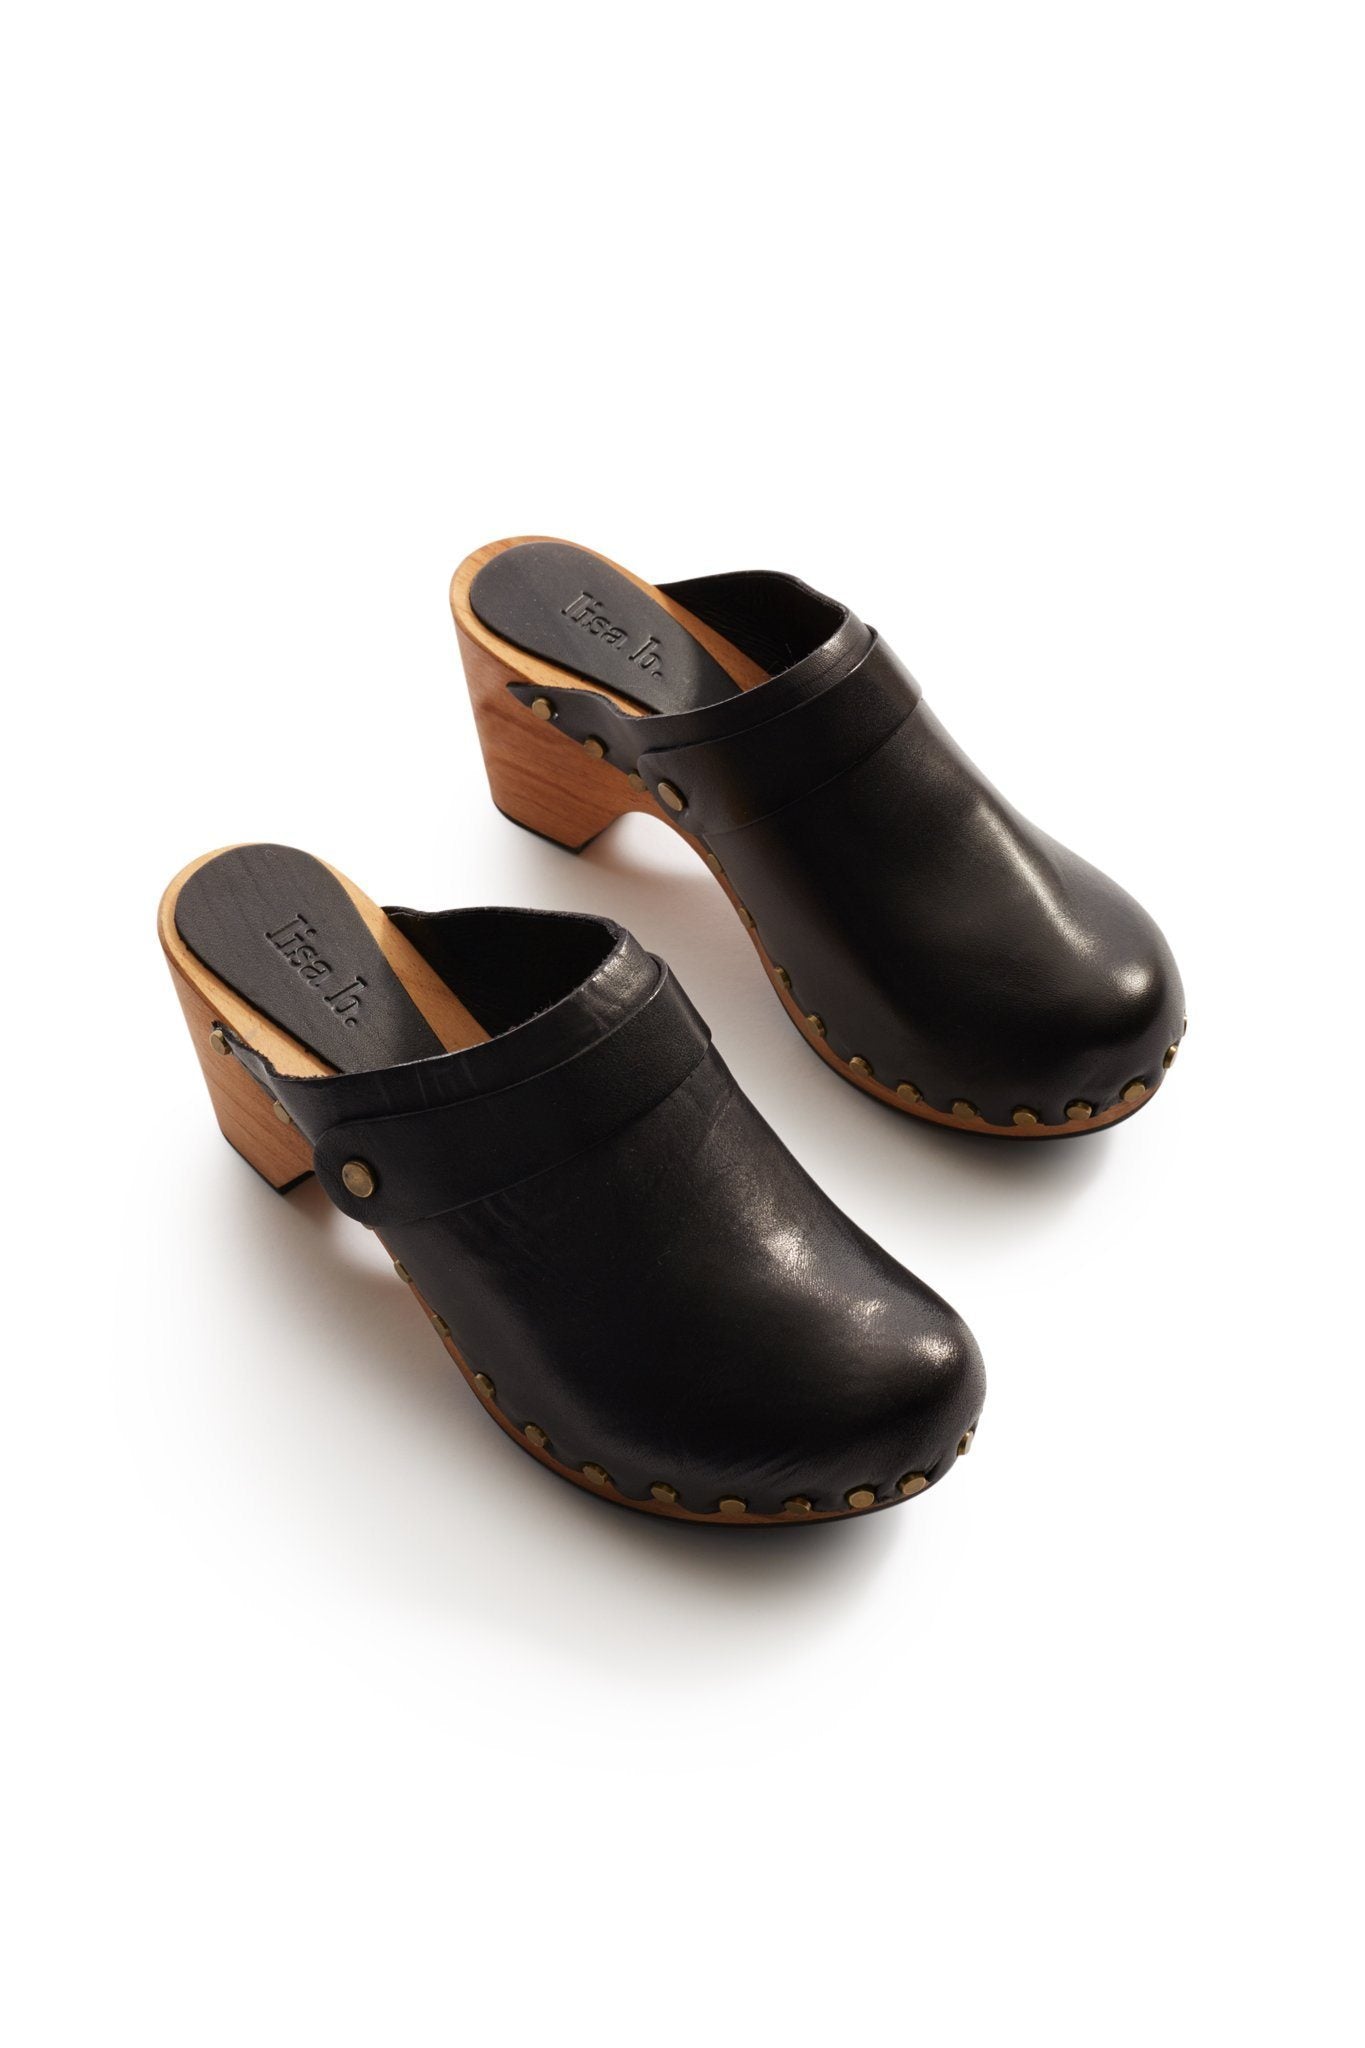 high heel classic clogs in black Clogs lisa b. black 36 (US 5.5-6) 